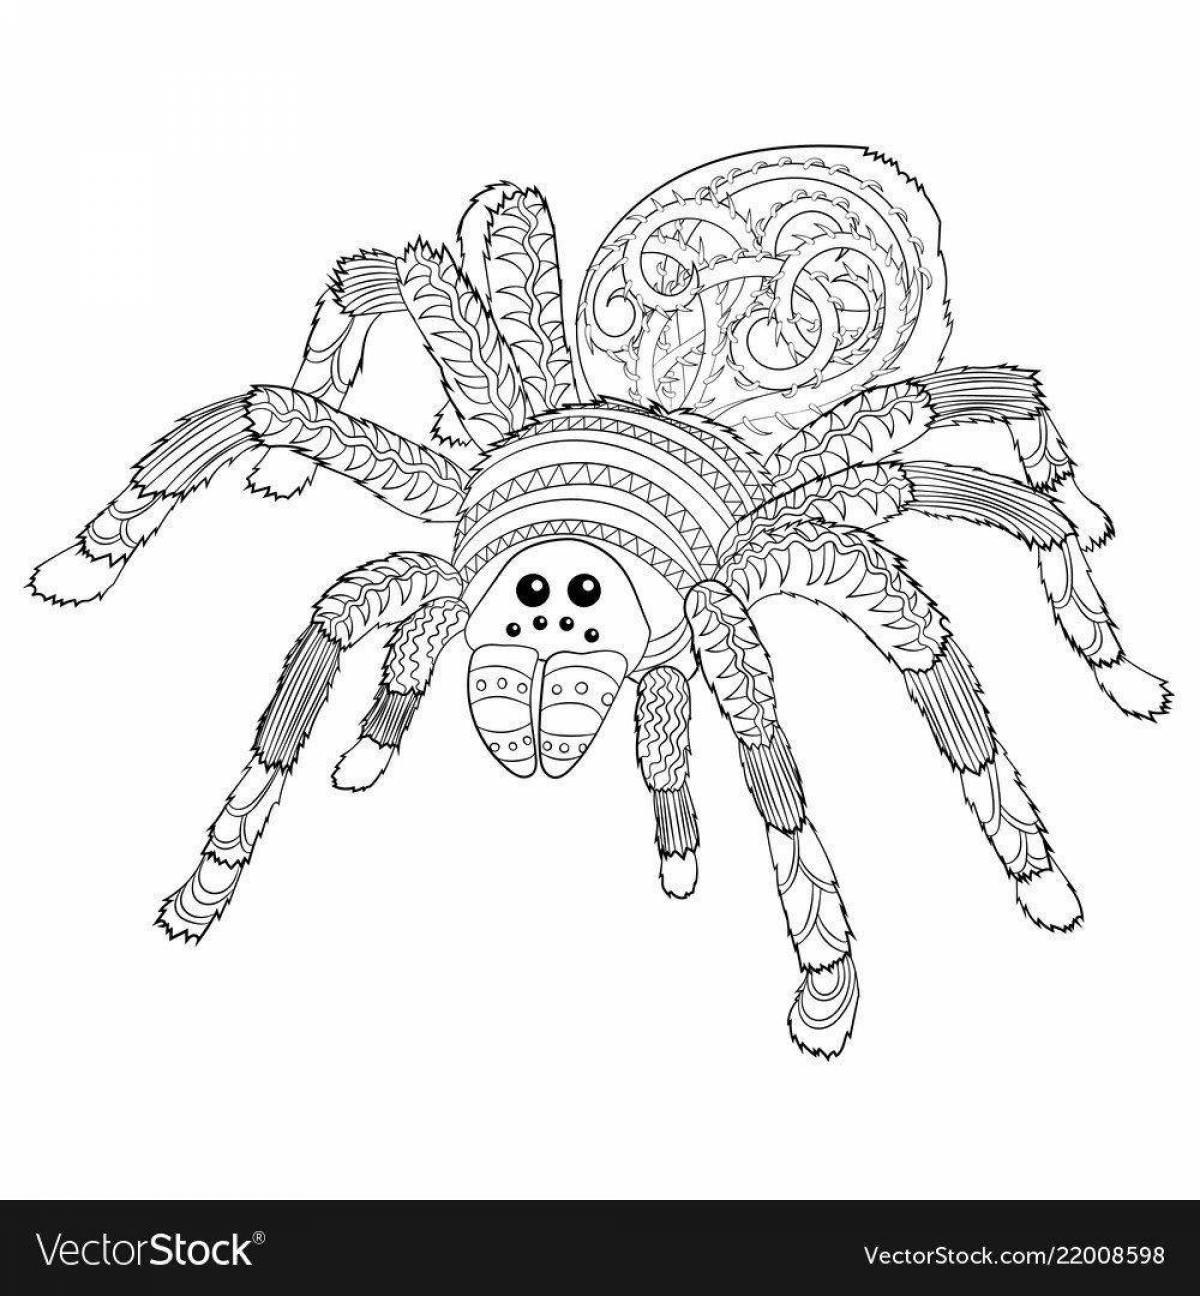 Joyful anti-stress spider coloring book